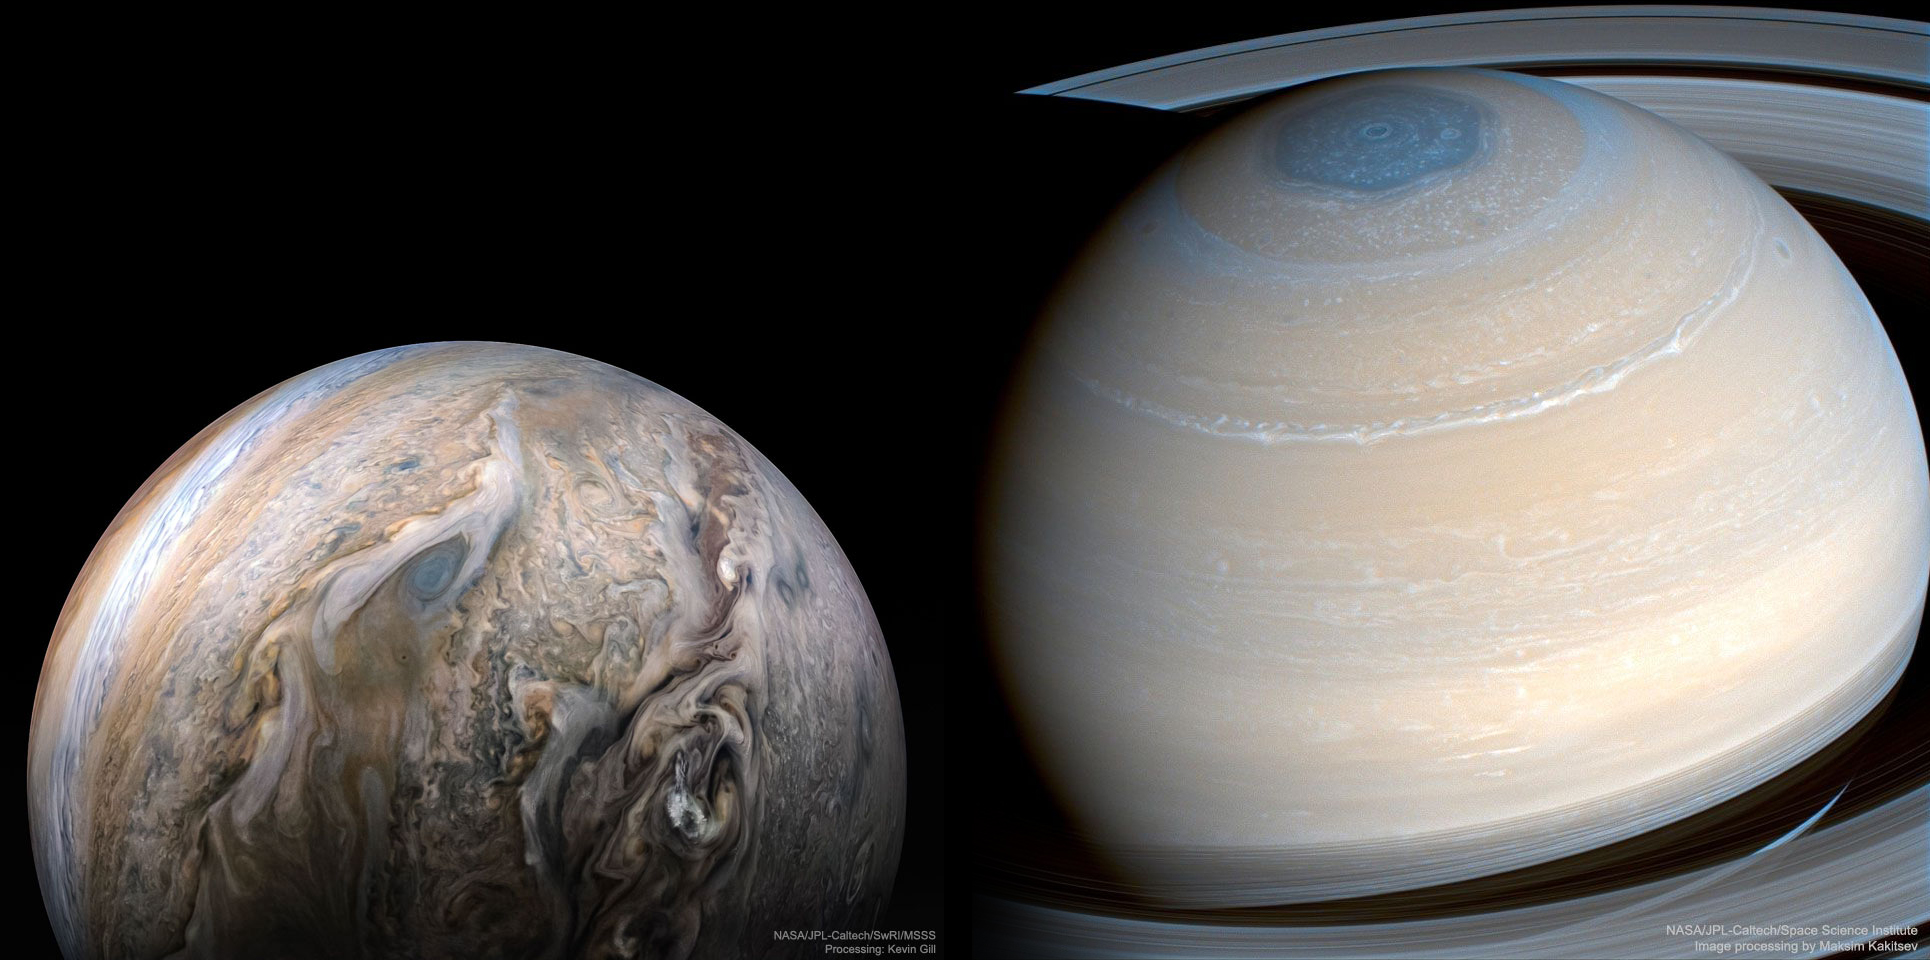 Jupiter and Saturn